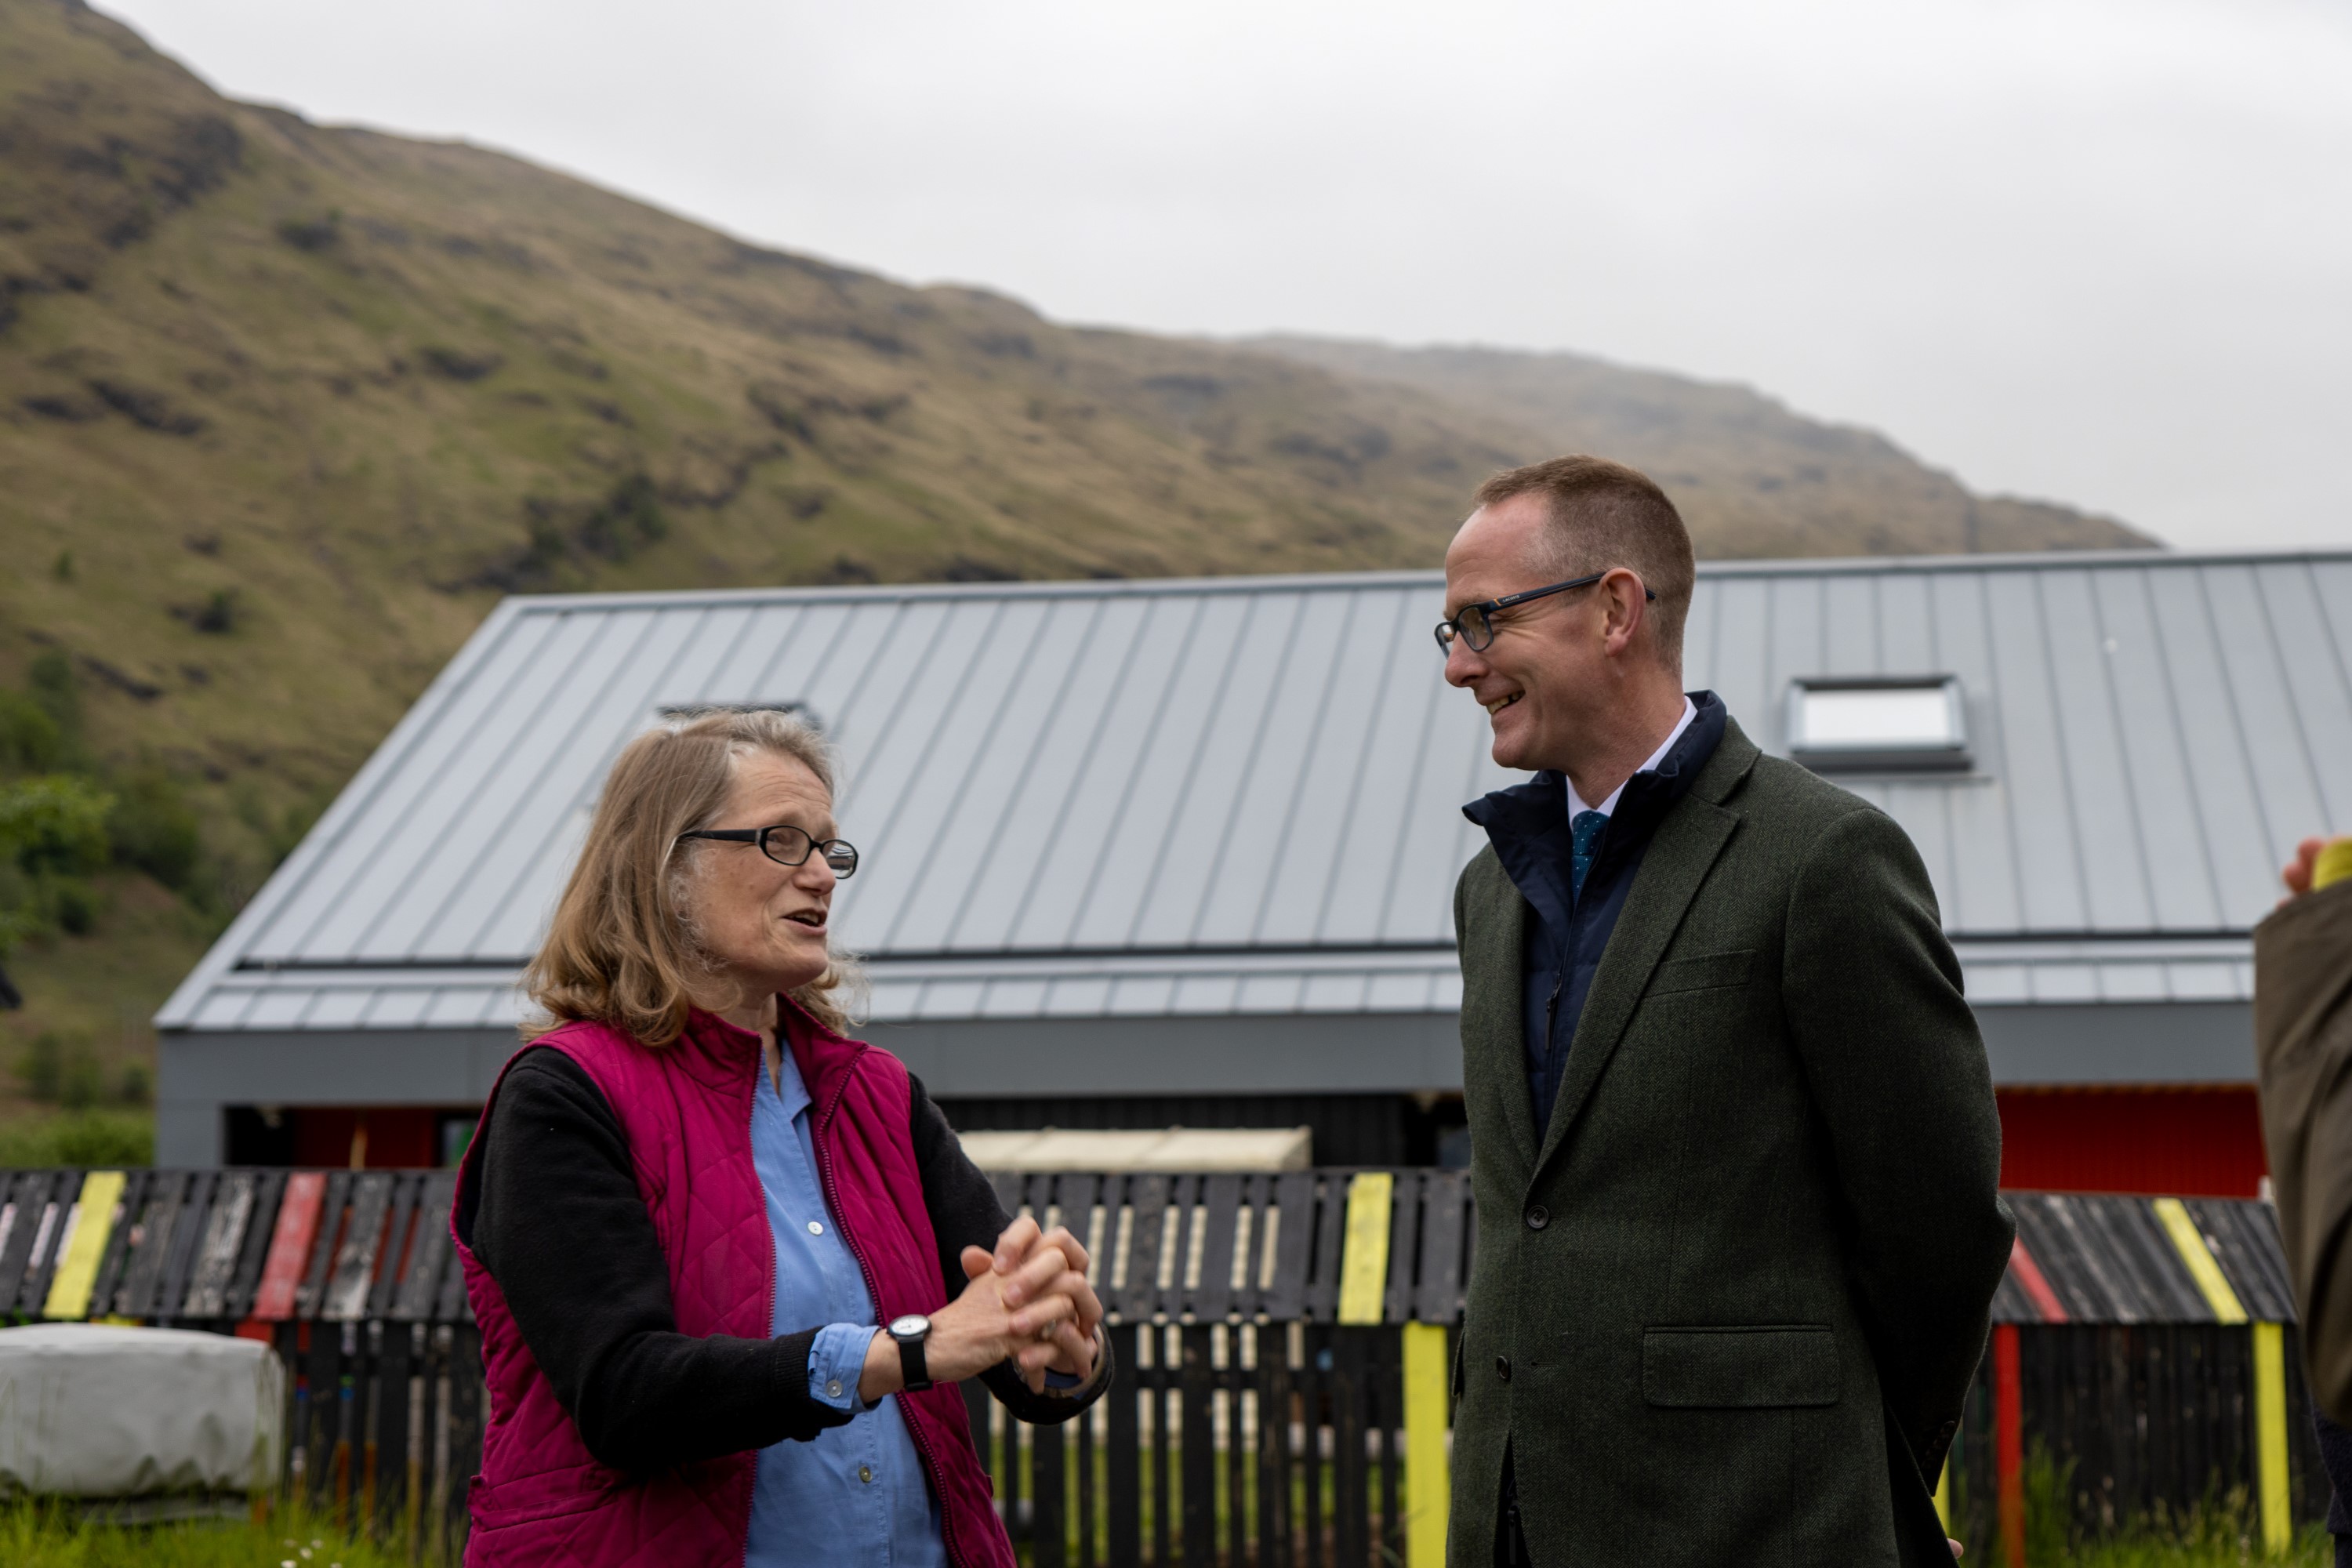 Rural estates in Argyll host visit by John Lamont MP